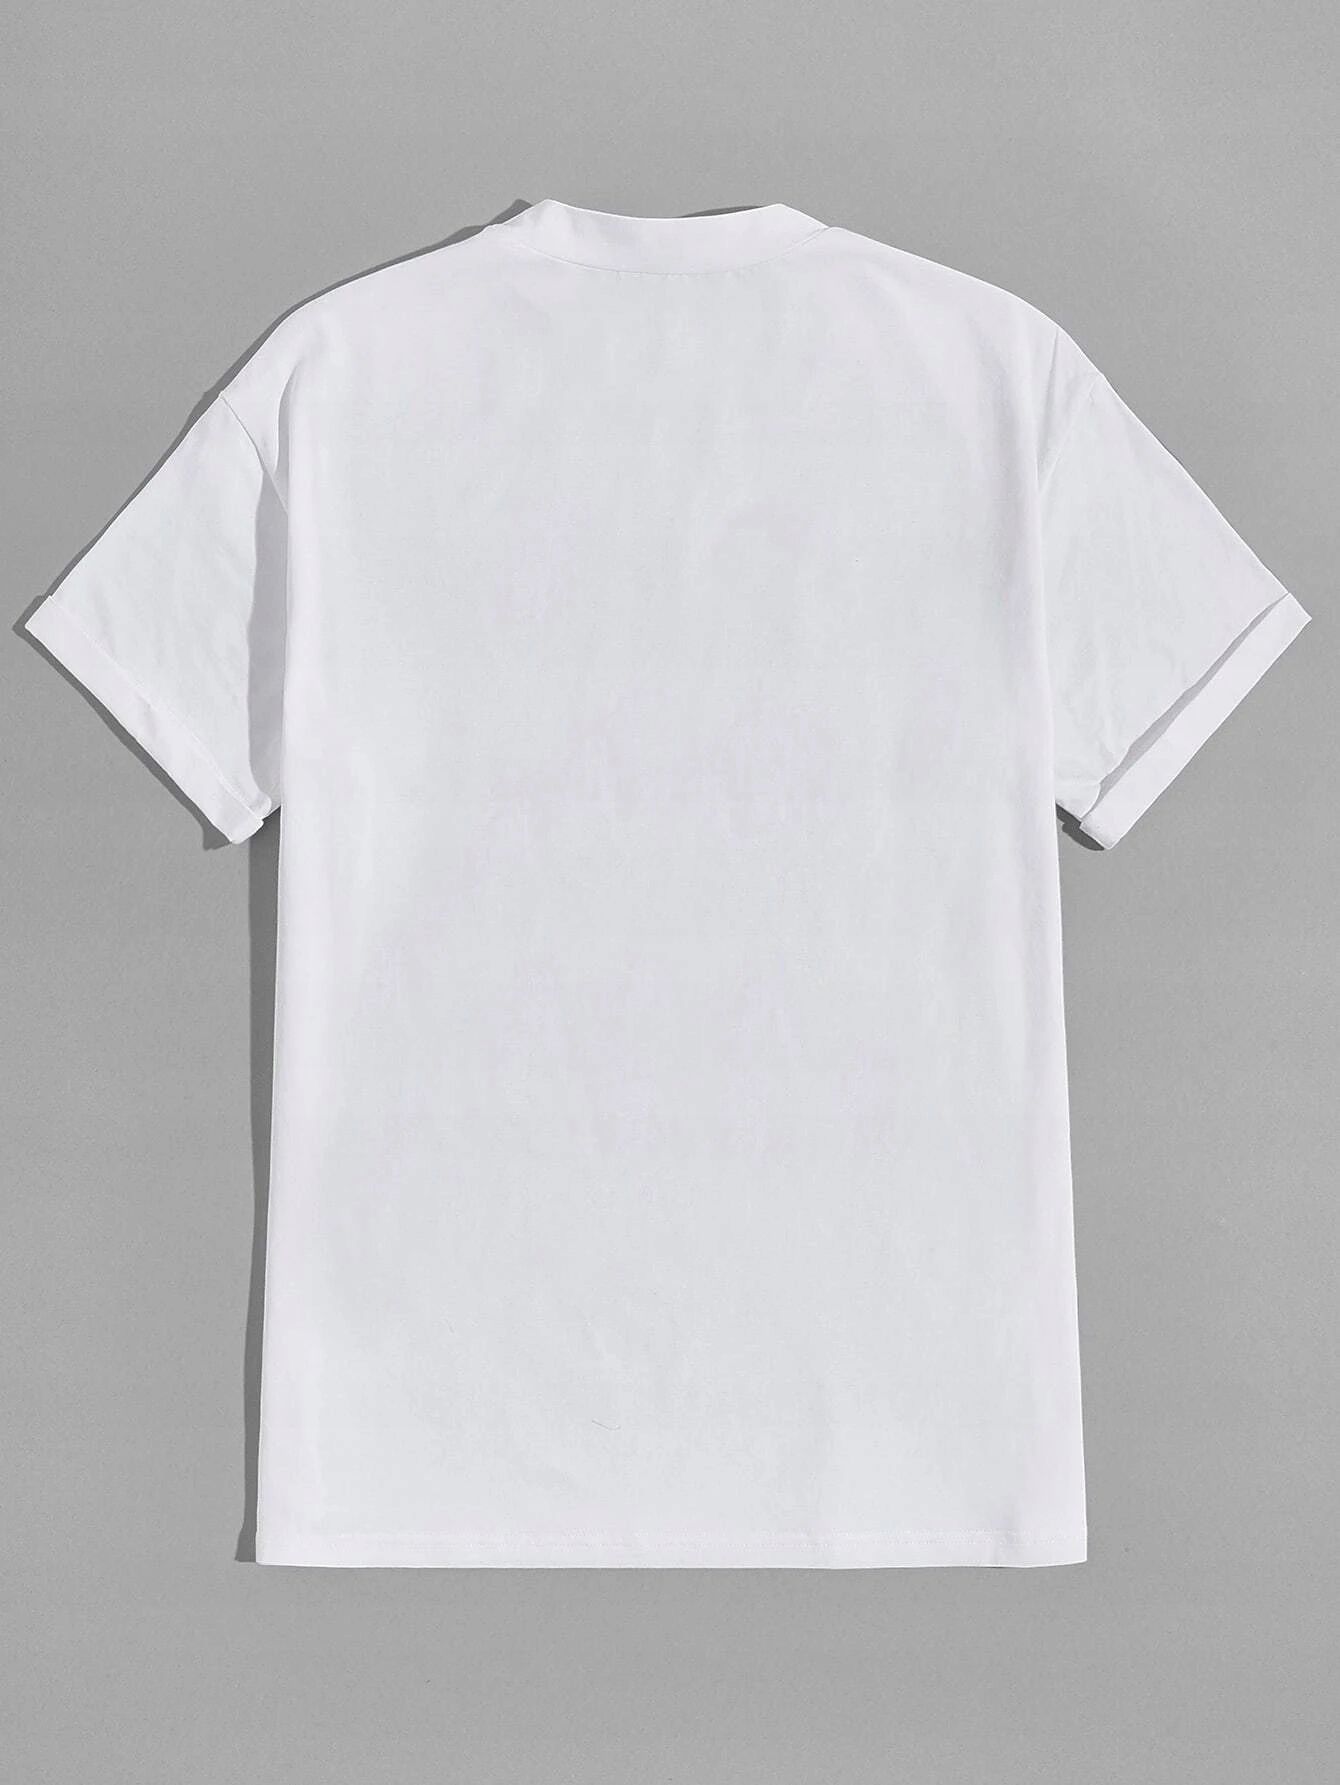 T-Shirt Bawełniany Biały Nadruk Pelikan Xl 42